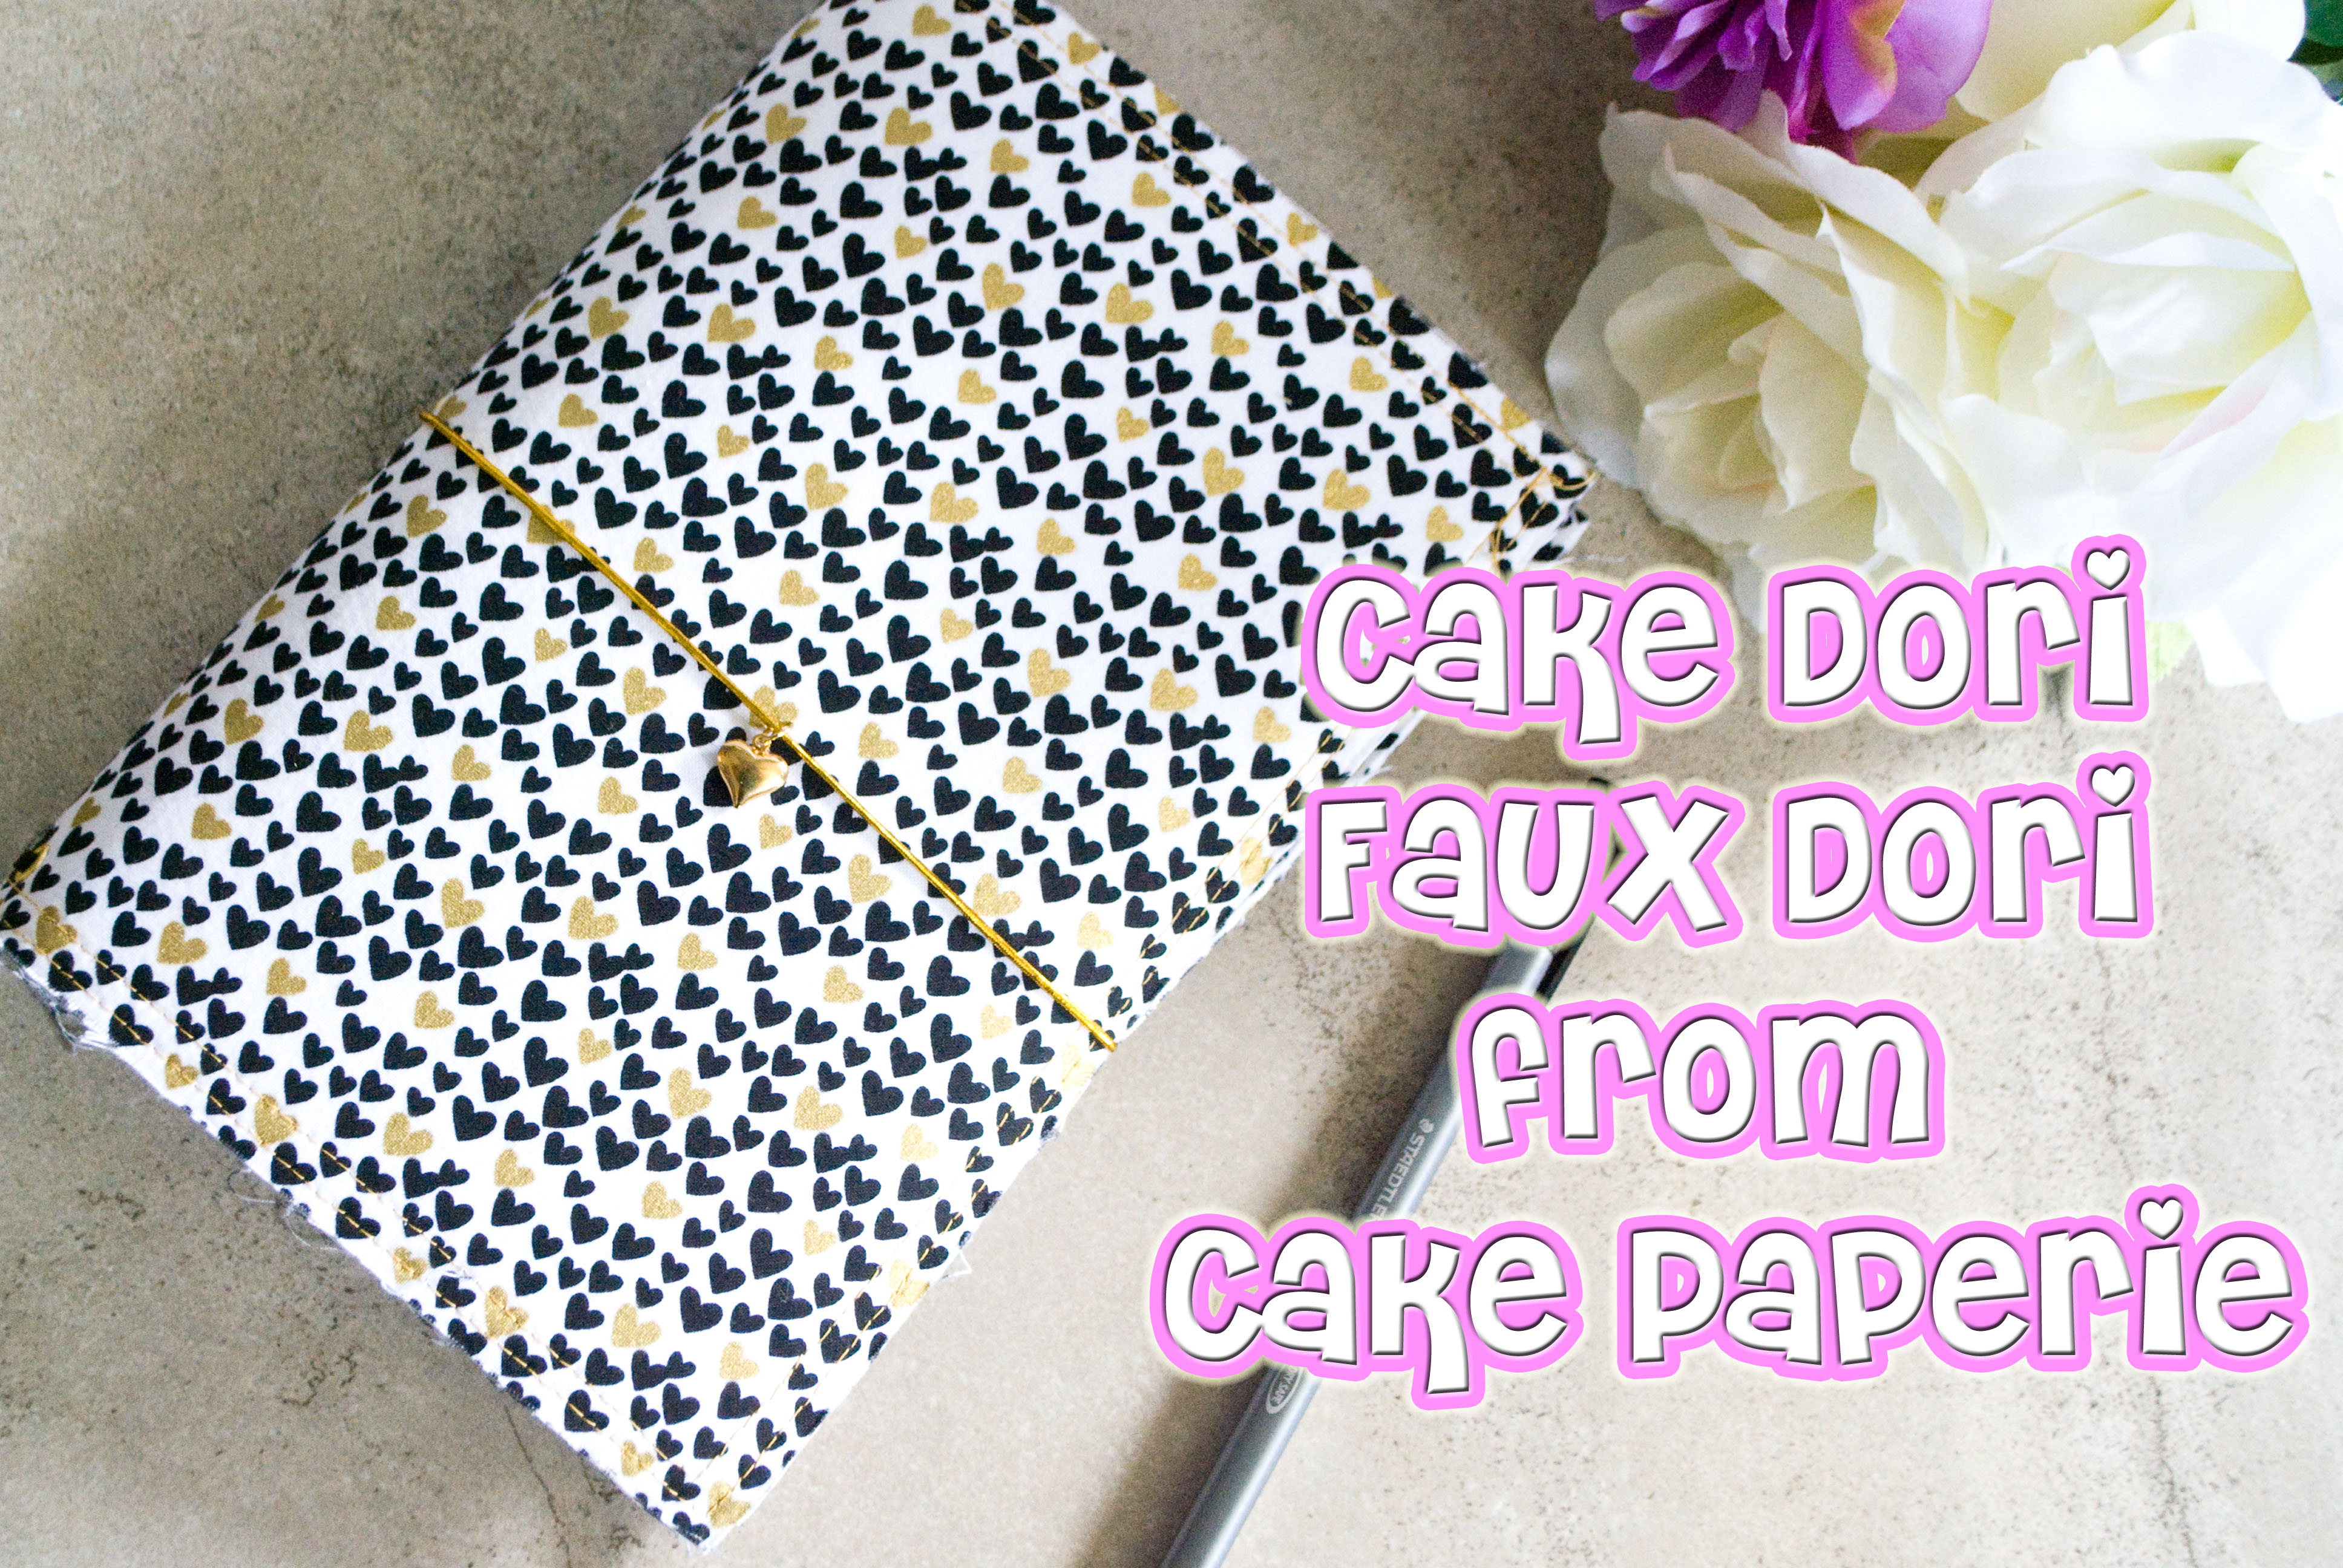 Cake Dori Faux Dori Cake Paperie